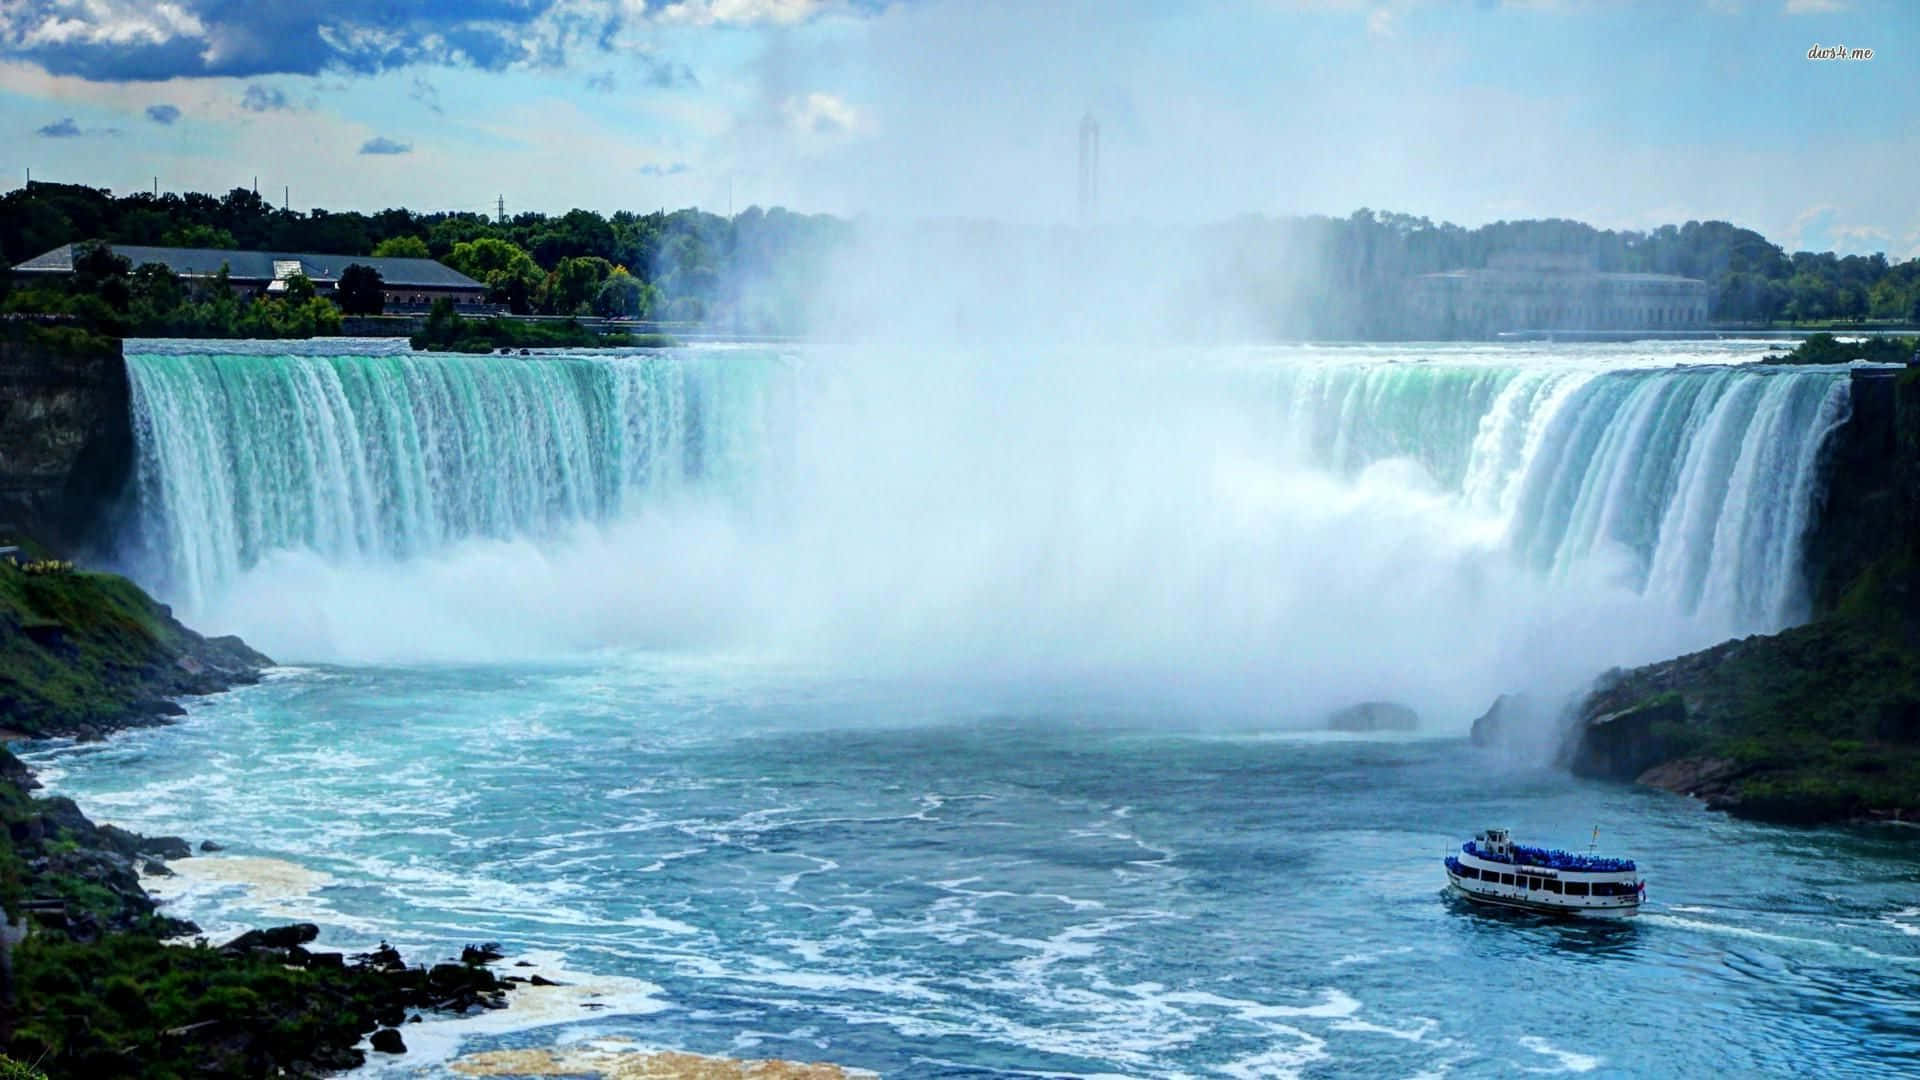 A mystical view of Niagara Falls